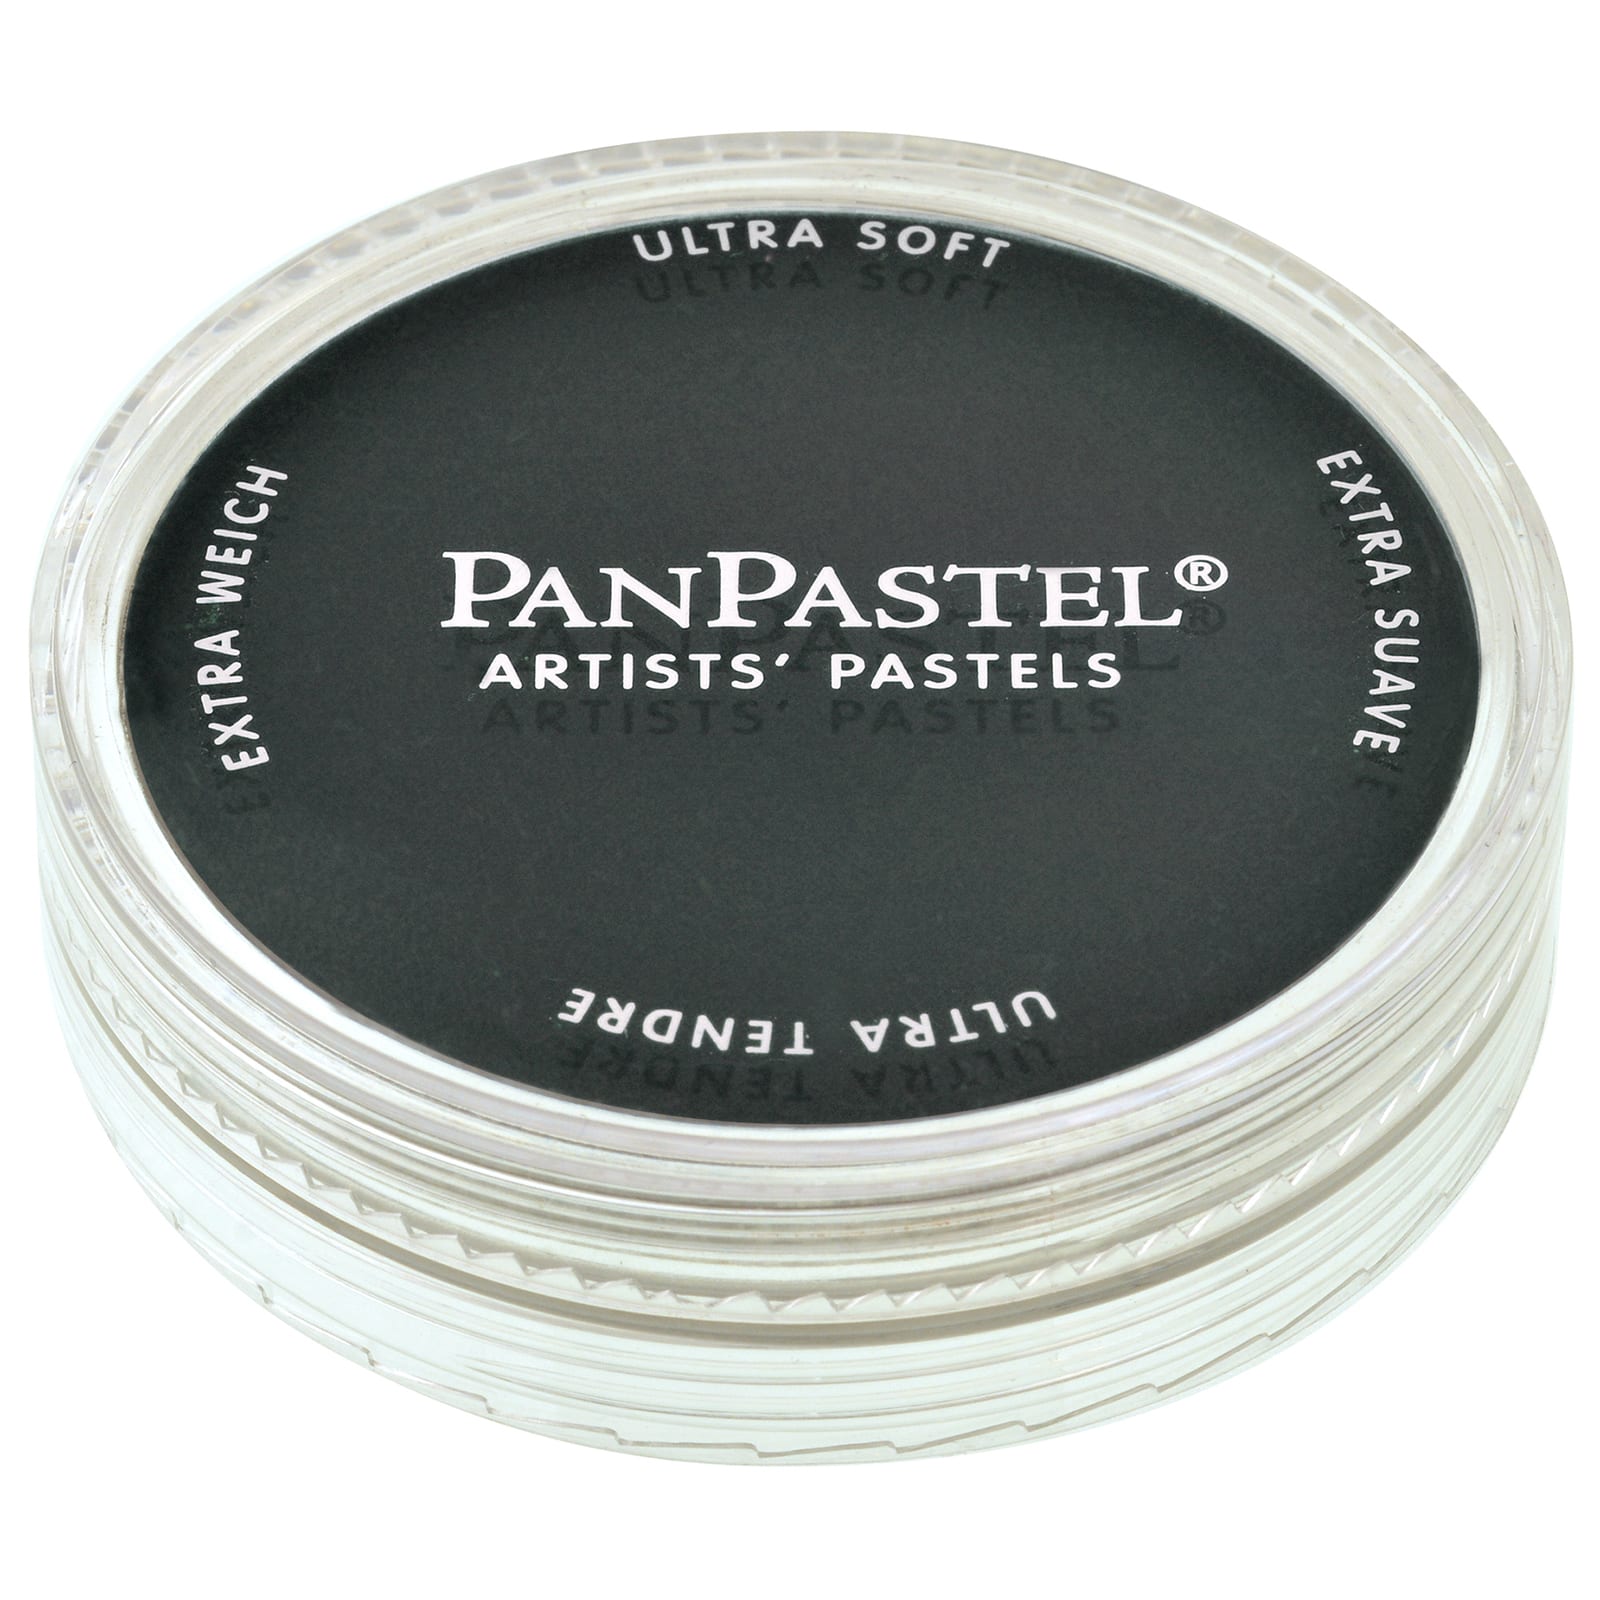 PanPastel Colors – Ultra Soft Artists' Painting Pastels - Pan Pastel